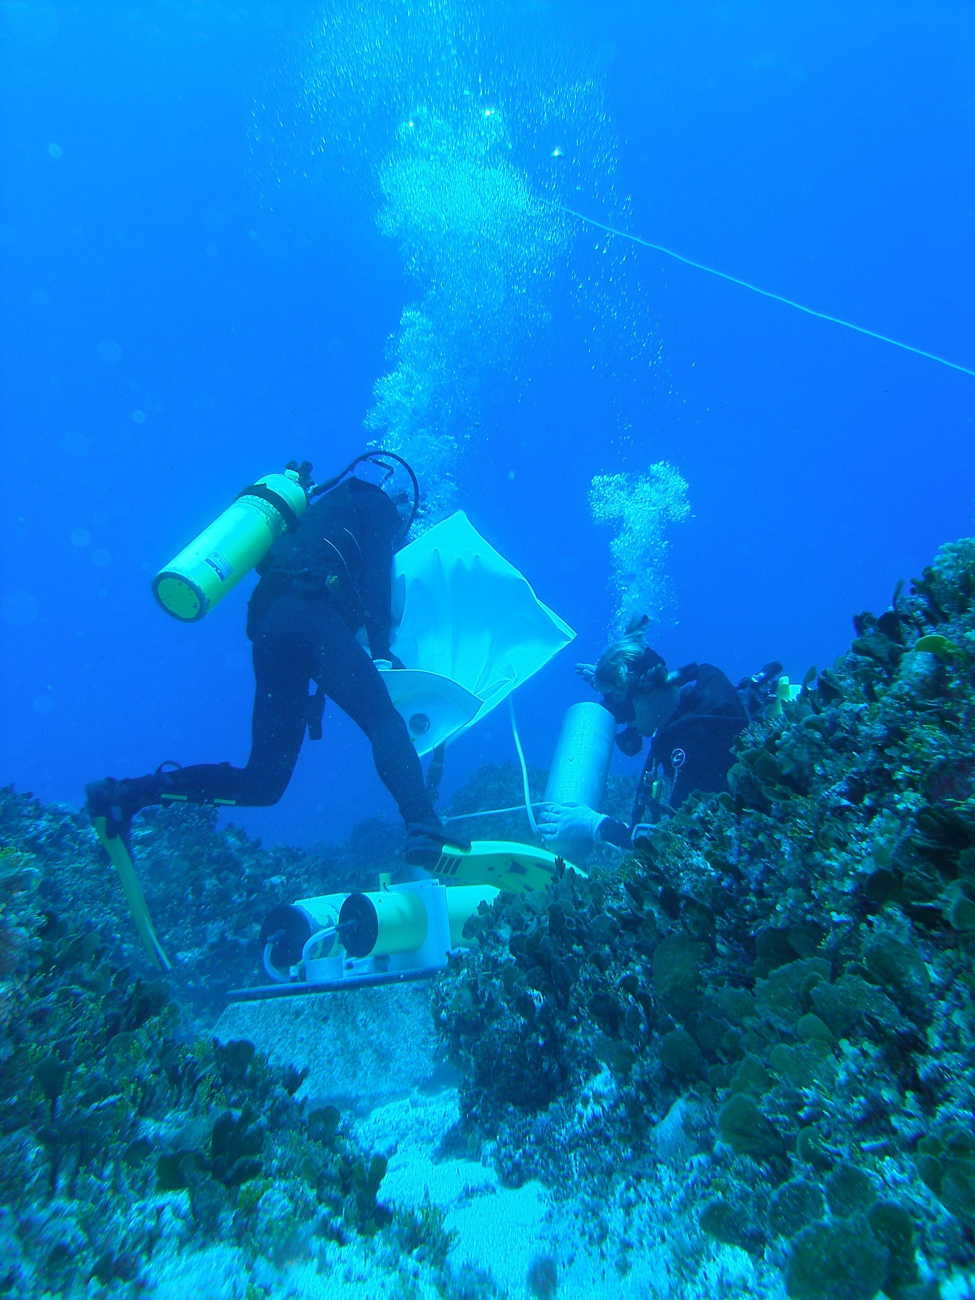 Biological Technicians Danny Merritt and Oliver Dameron install the newOcean Data Platform (ODP) on Santa Rosa bank off of Guam